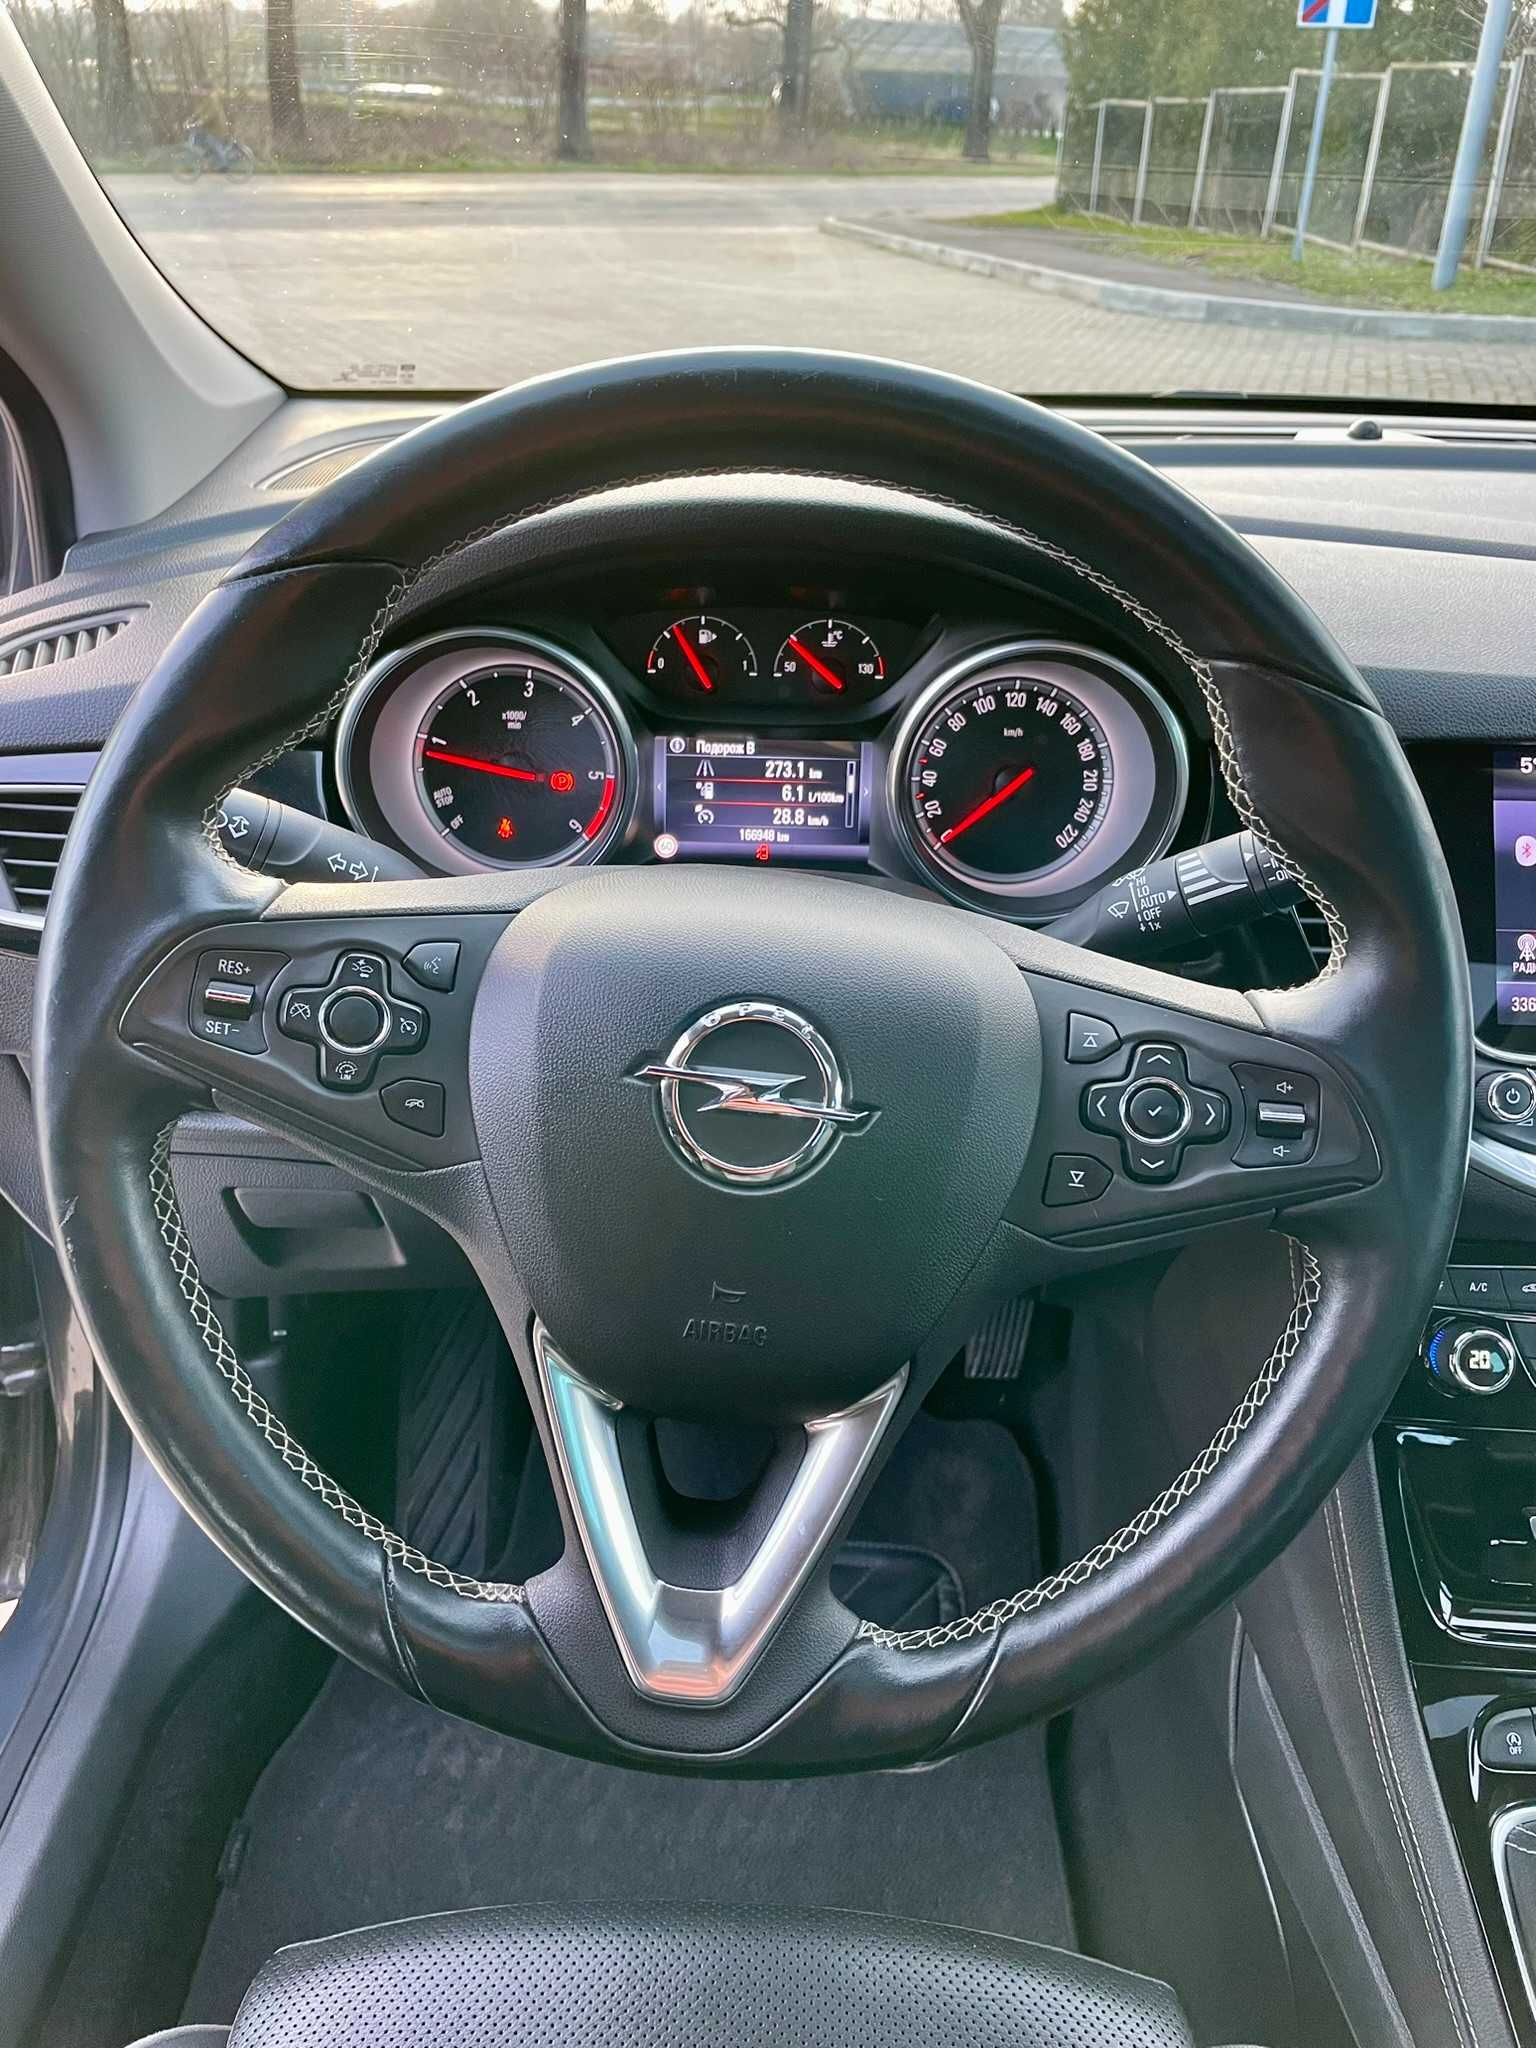 Opel Astra K/Опель Астра К 2016р. [ідеально доглянутий стан]